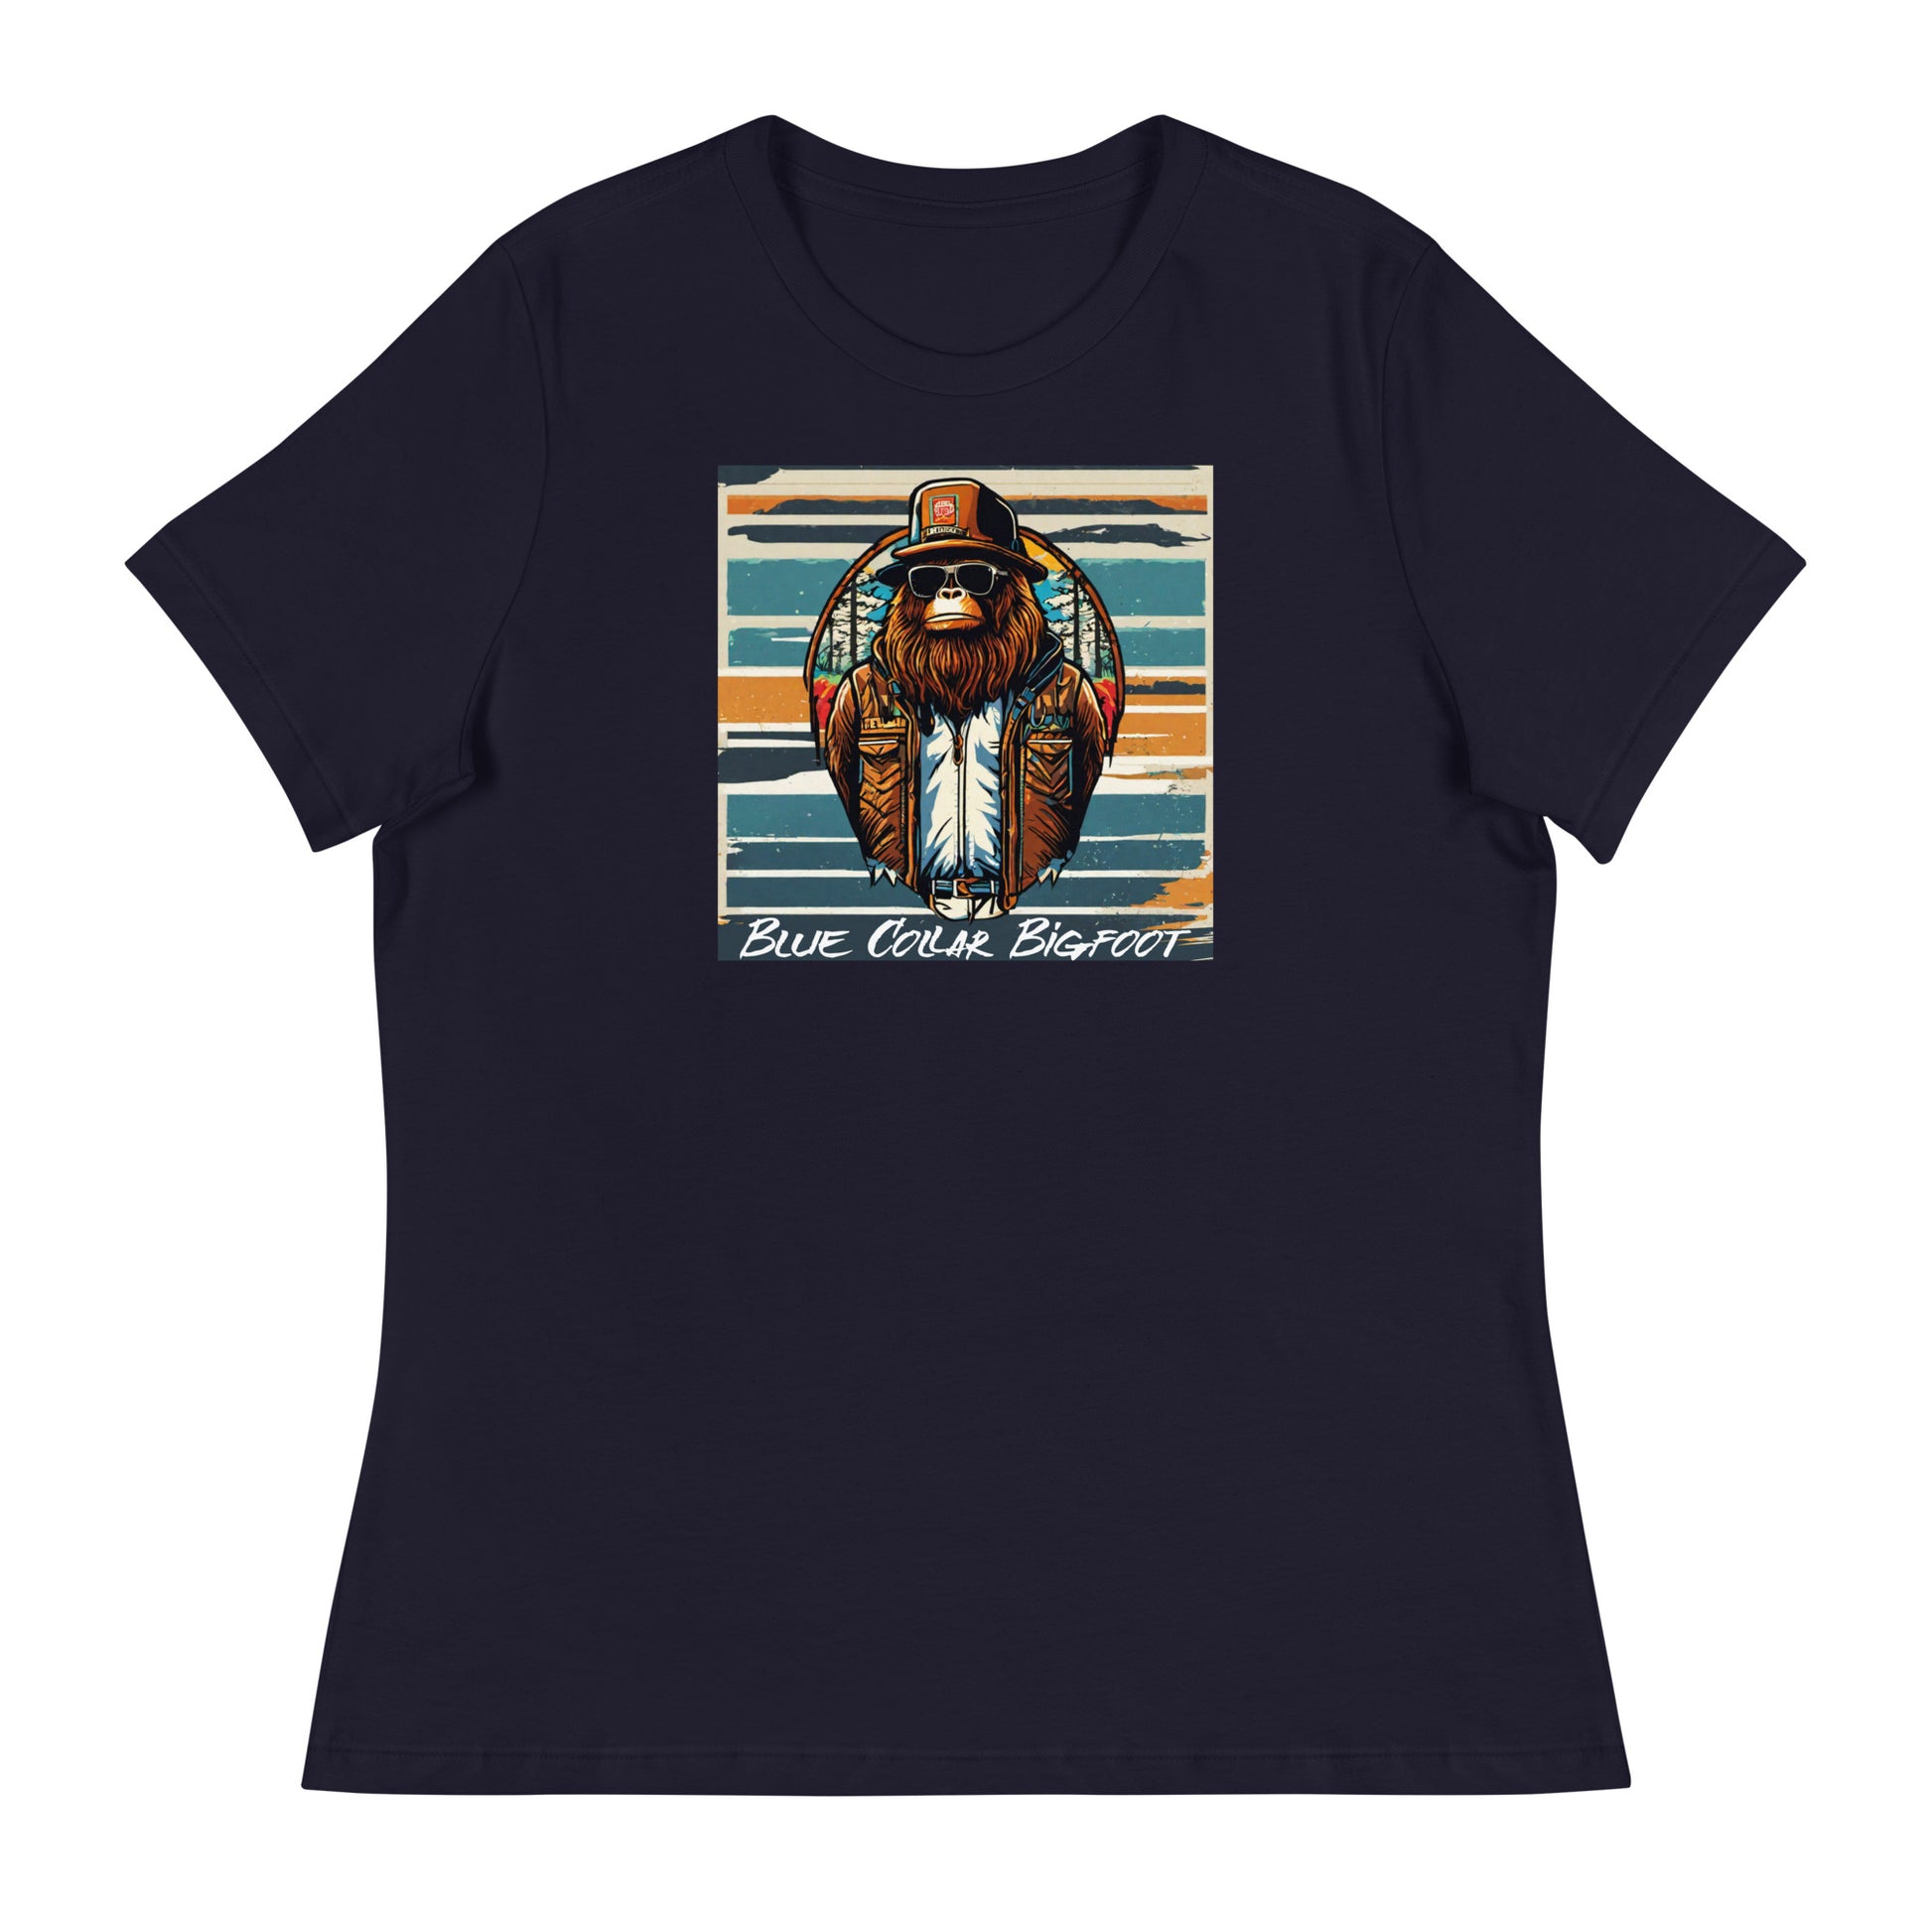 Blue-Collar Bigfoot Women's Graphic T-Shirt Navy